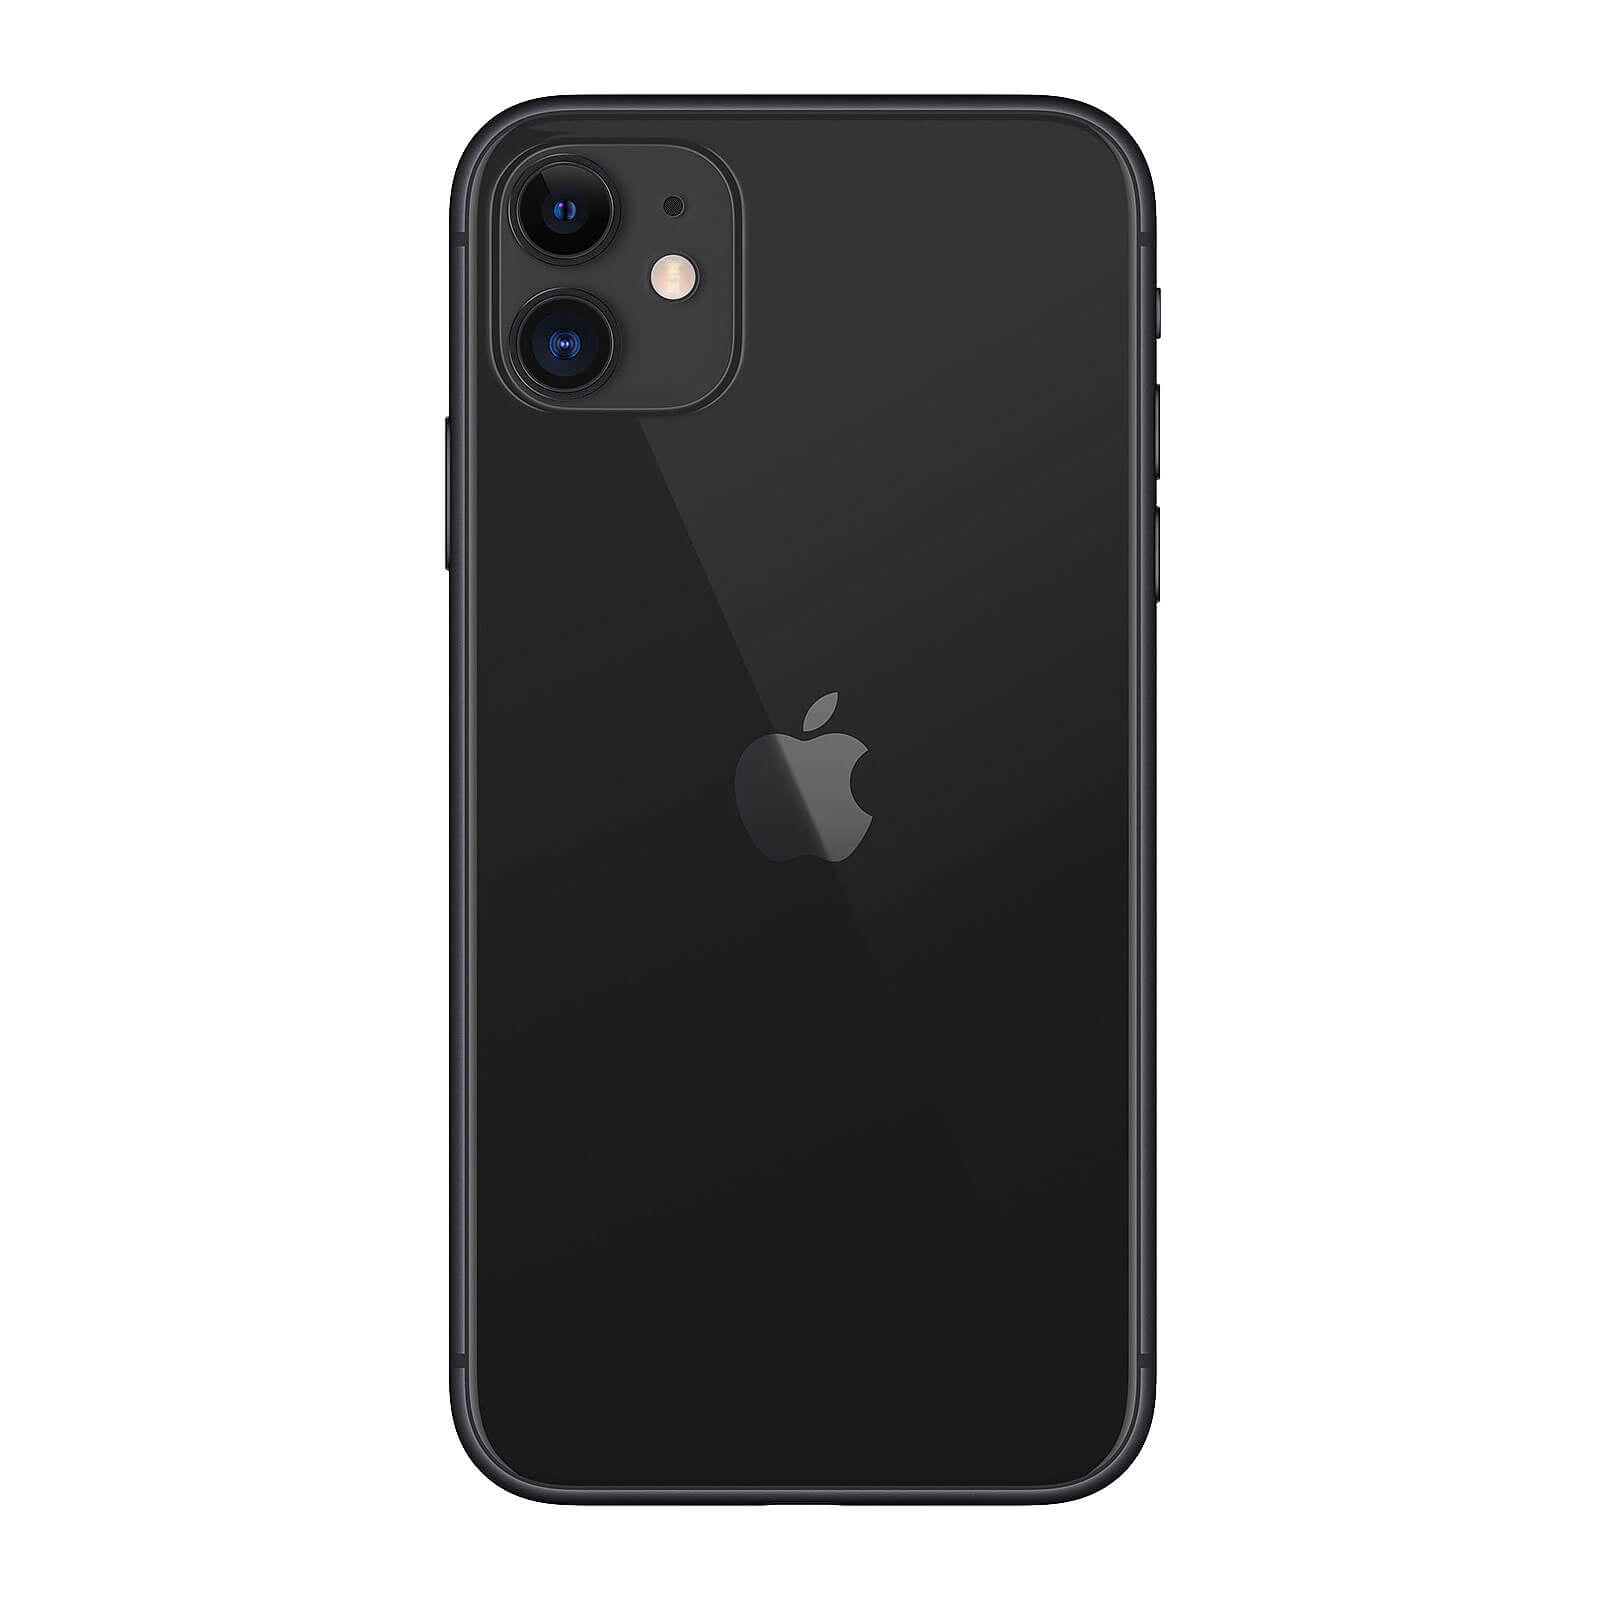 Apple iPhone 11 128GB Black Good - Verizon